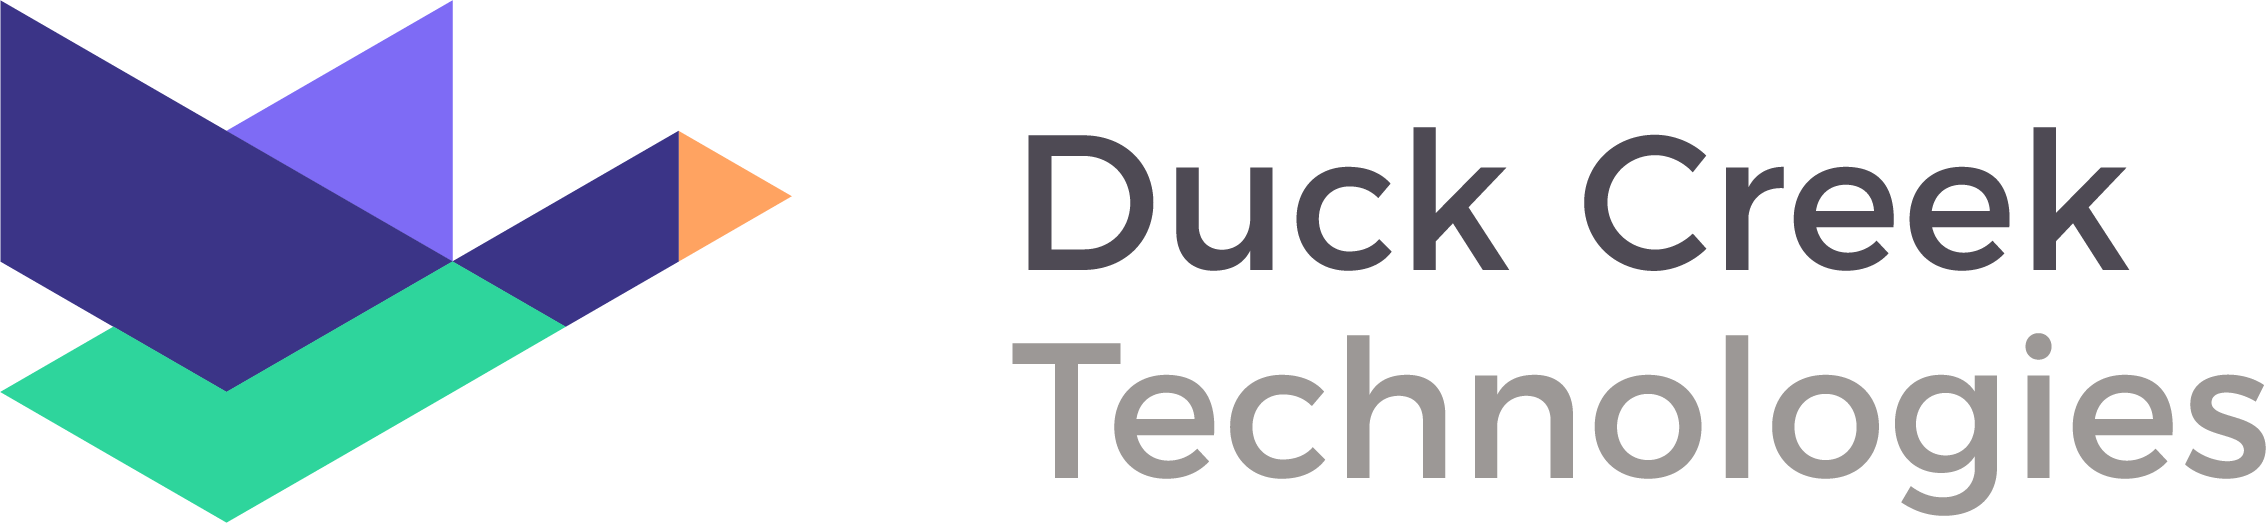 IBM Joins Duck Creek